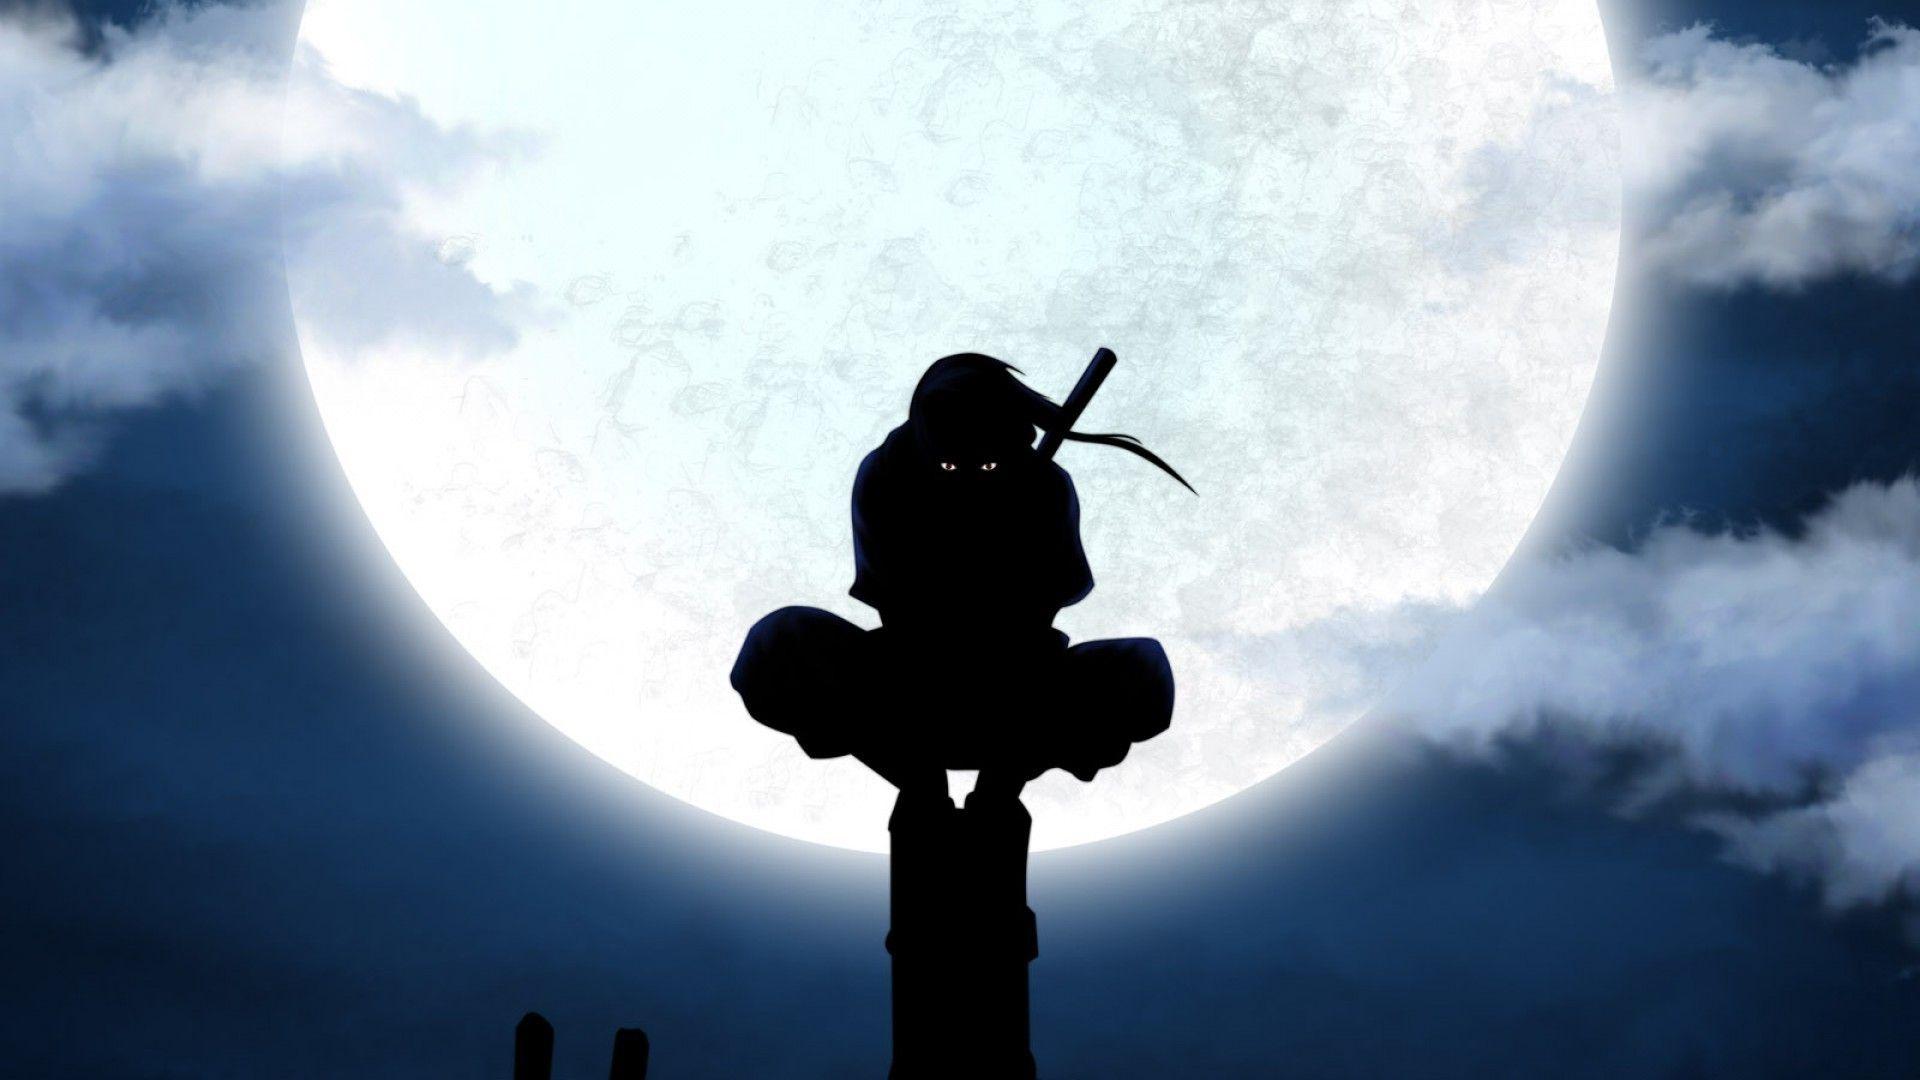 Wallpaper, anime, sky, silhouette, Moon, atmosphere, utility pole